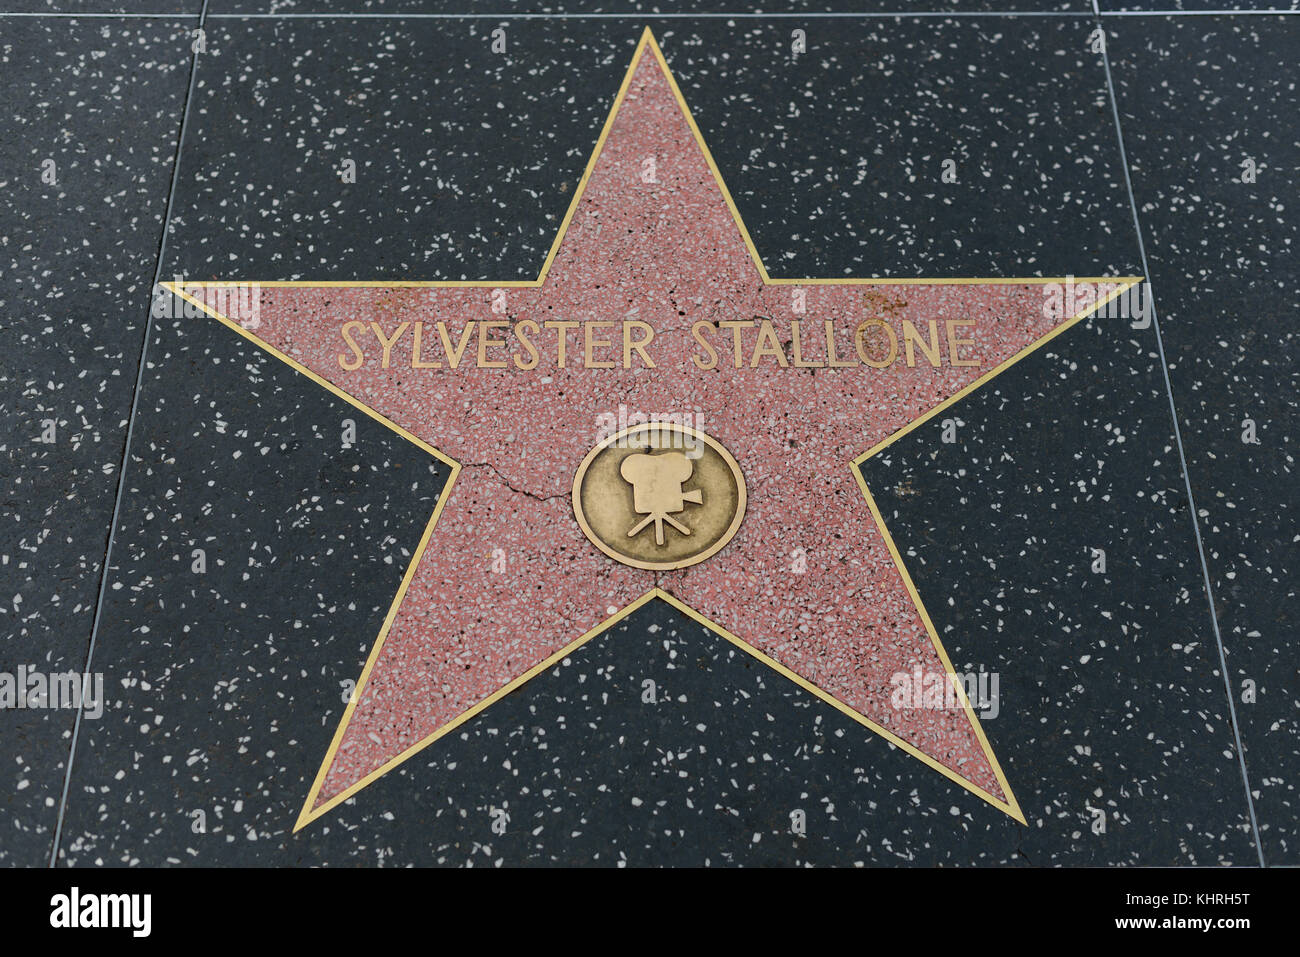 HOLLYWOOD, CA - DEZEMBER 06: Silvester Stallone Star auf dem Hollywood Walk of Fame in Hollywood, Kalifornien am 6. Dezember 2016. Stockfoto